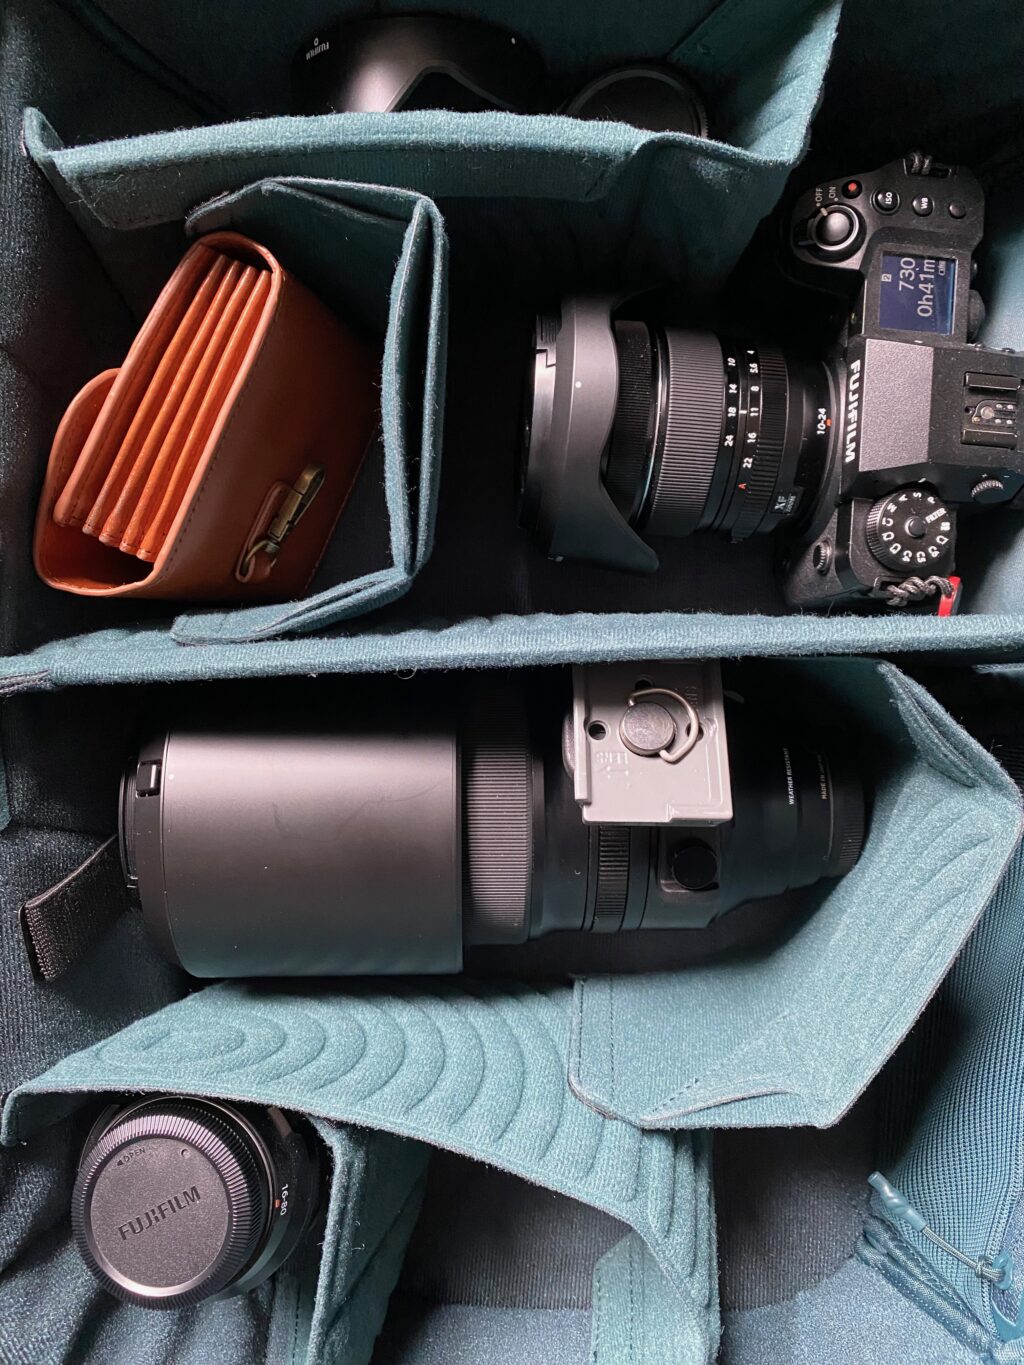 A PGYTech backpack with Fujifilm camera sytem inside. 